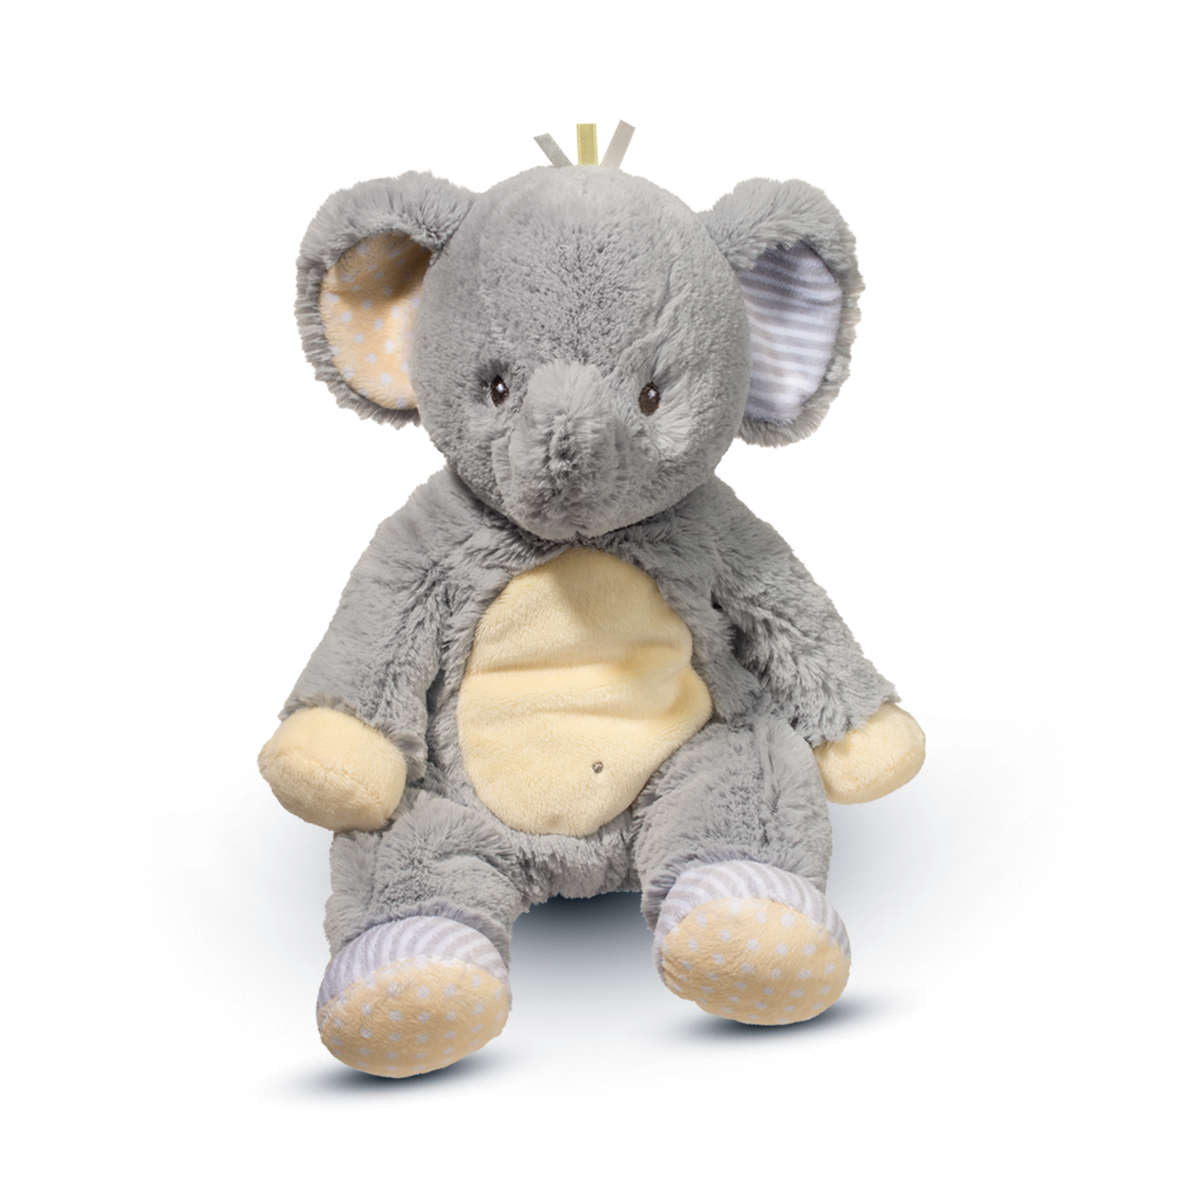 Plumpie Joey the Gray Elephant by Douglas